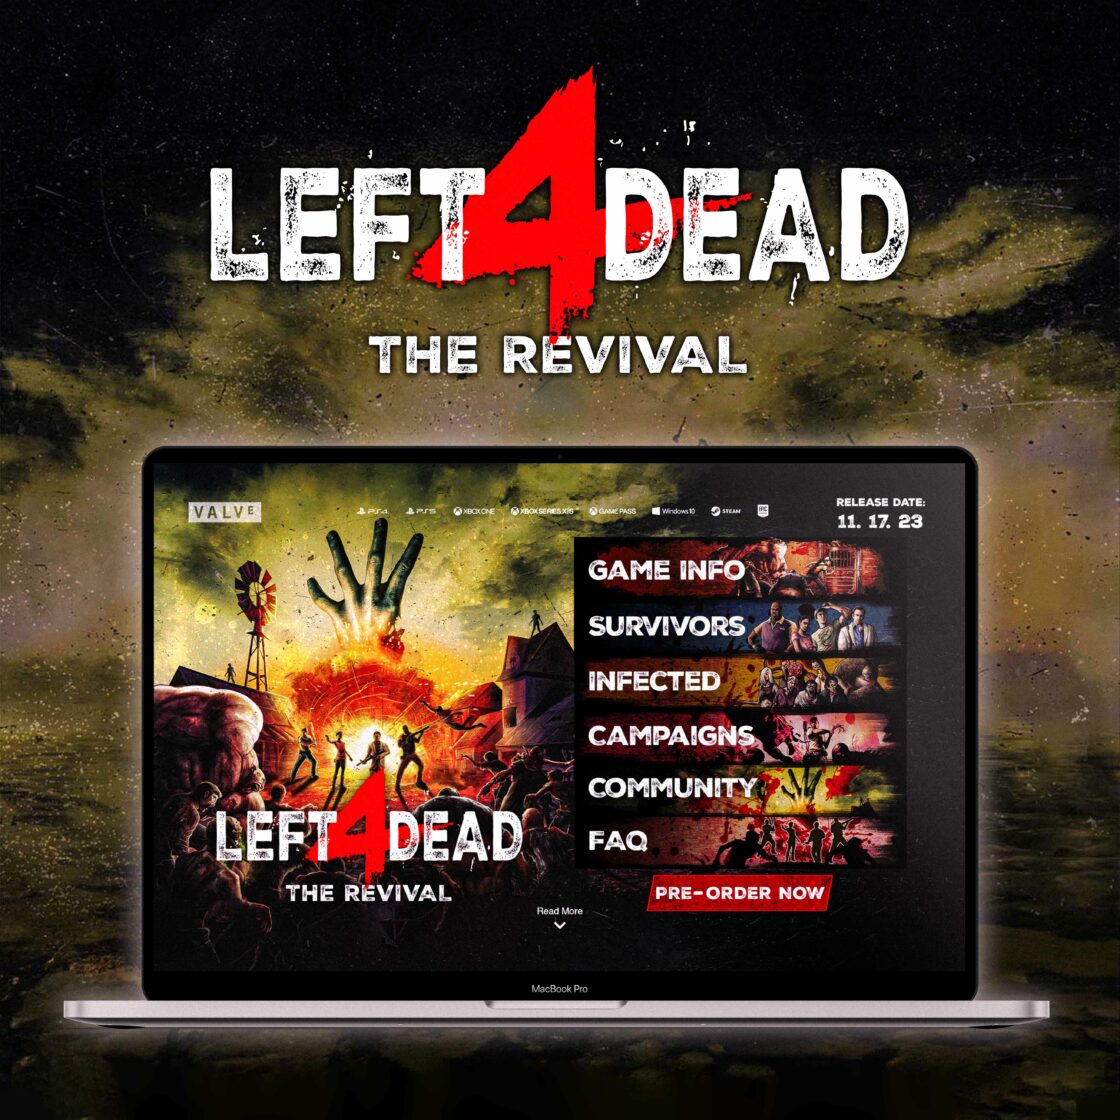 Left 4 Dead: The Revival